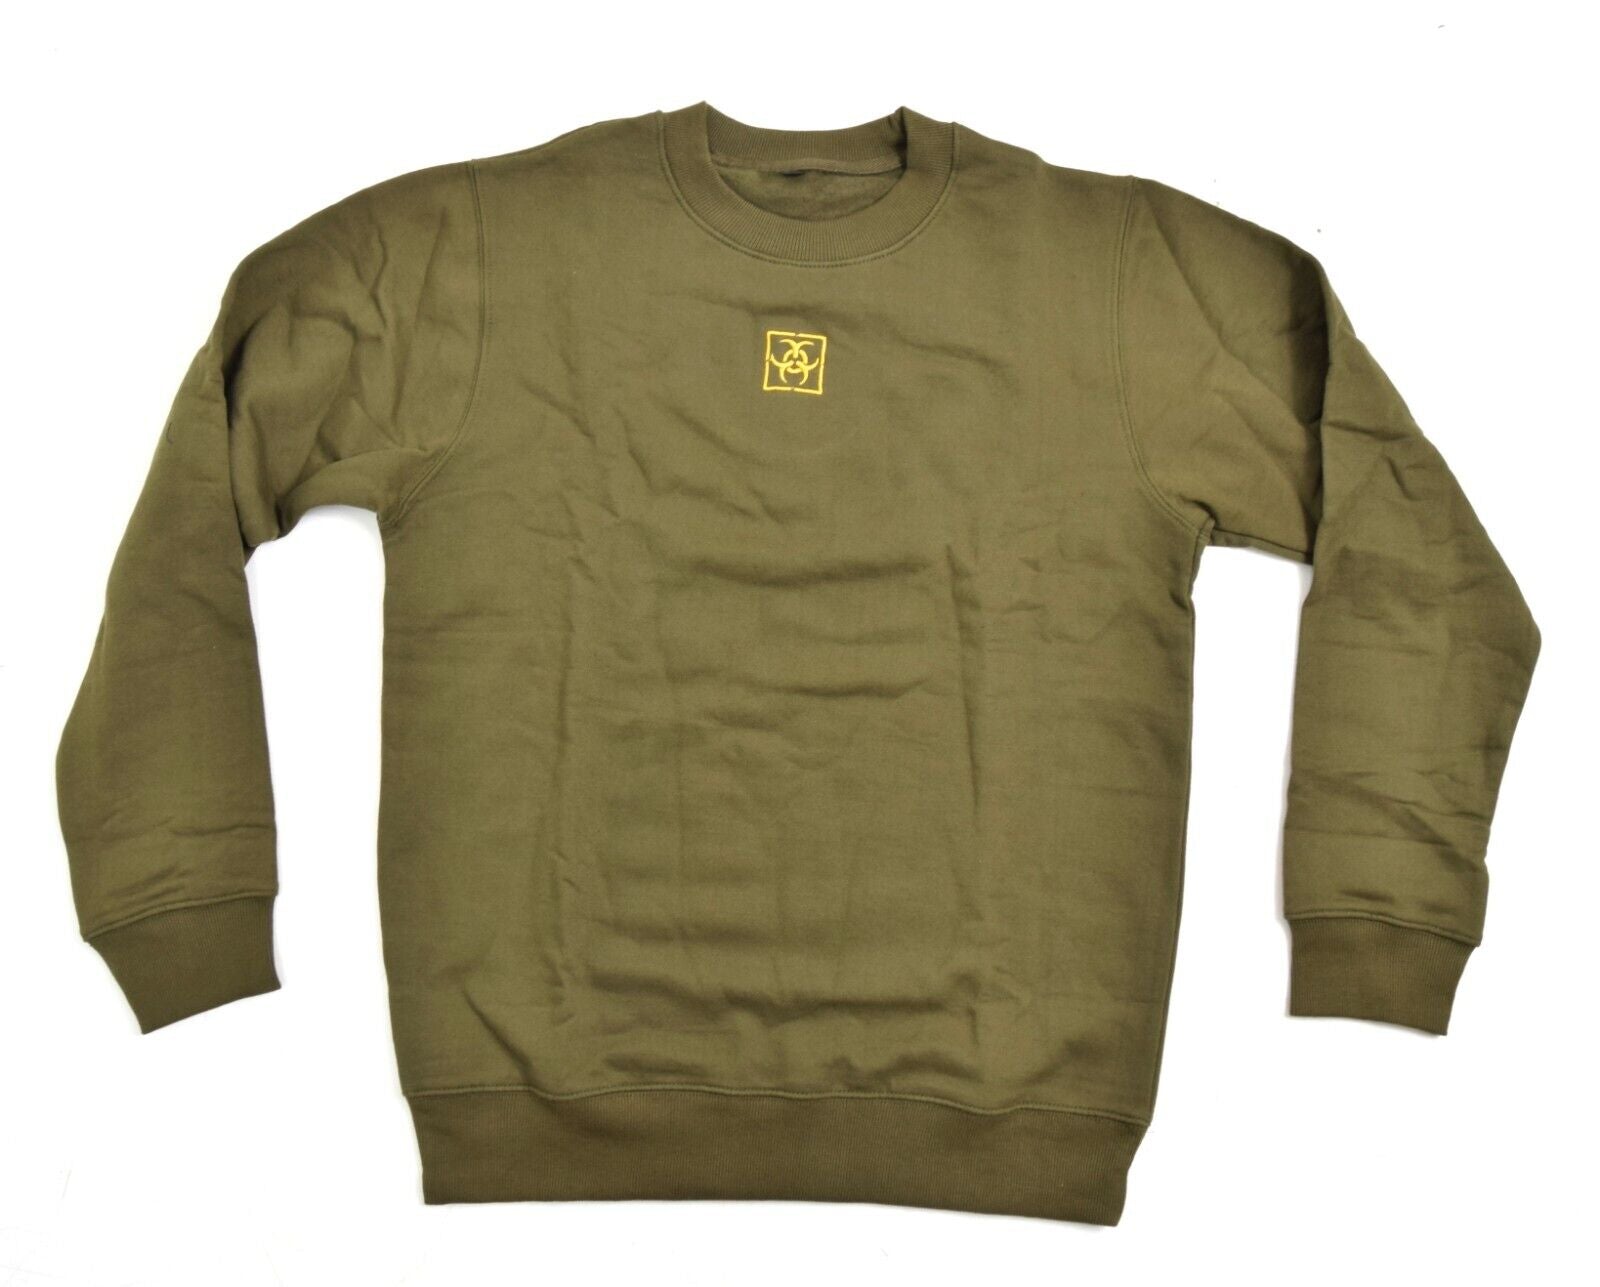 BIO HAZARD Unit Sweatshirt Army Military Olive Top Centre Logo BIOHAZARD Logo